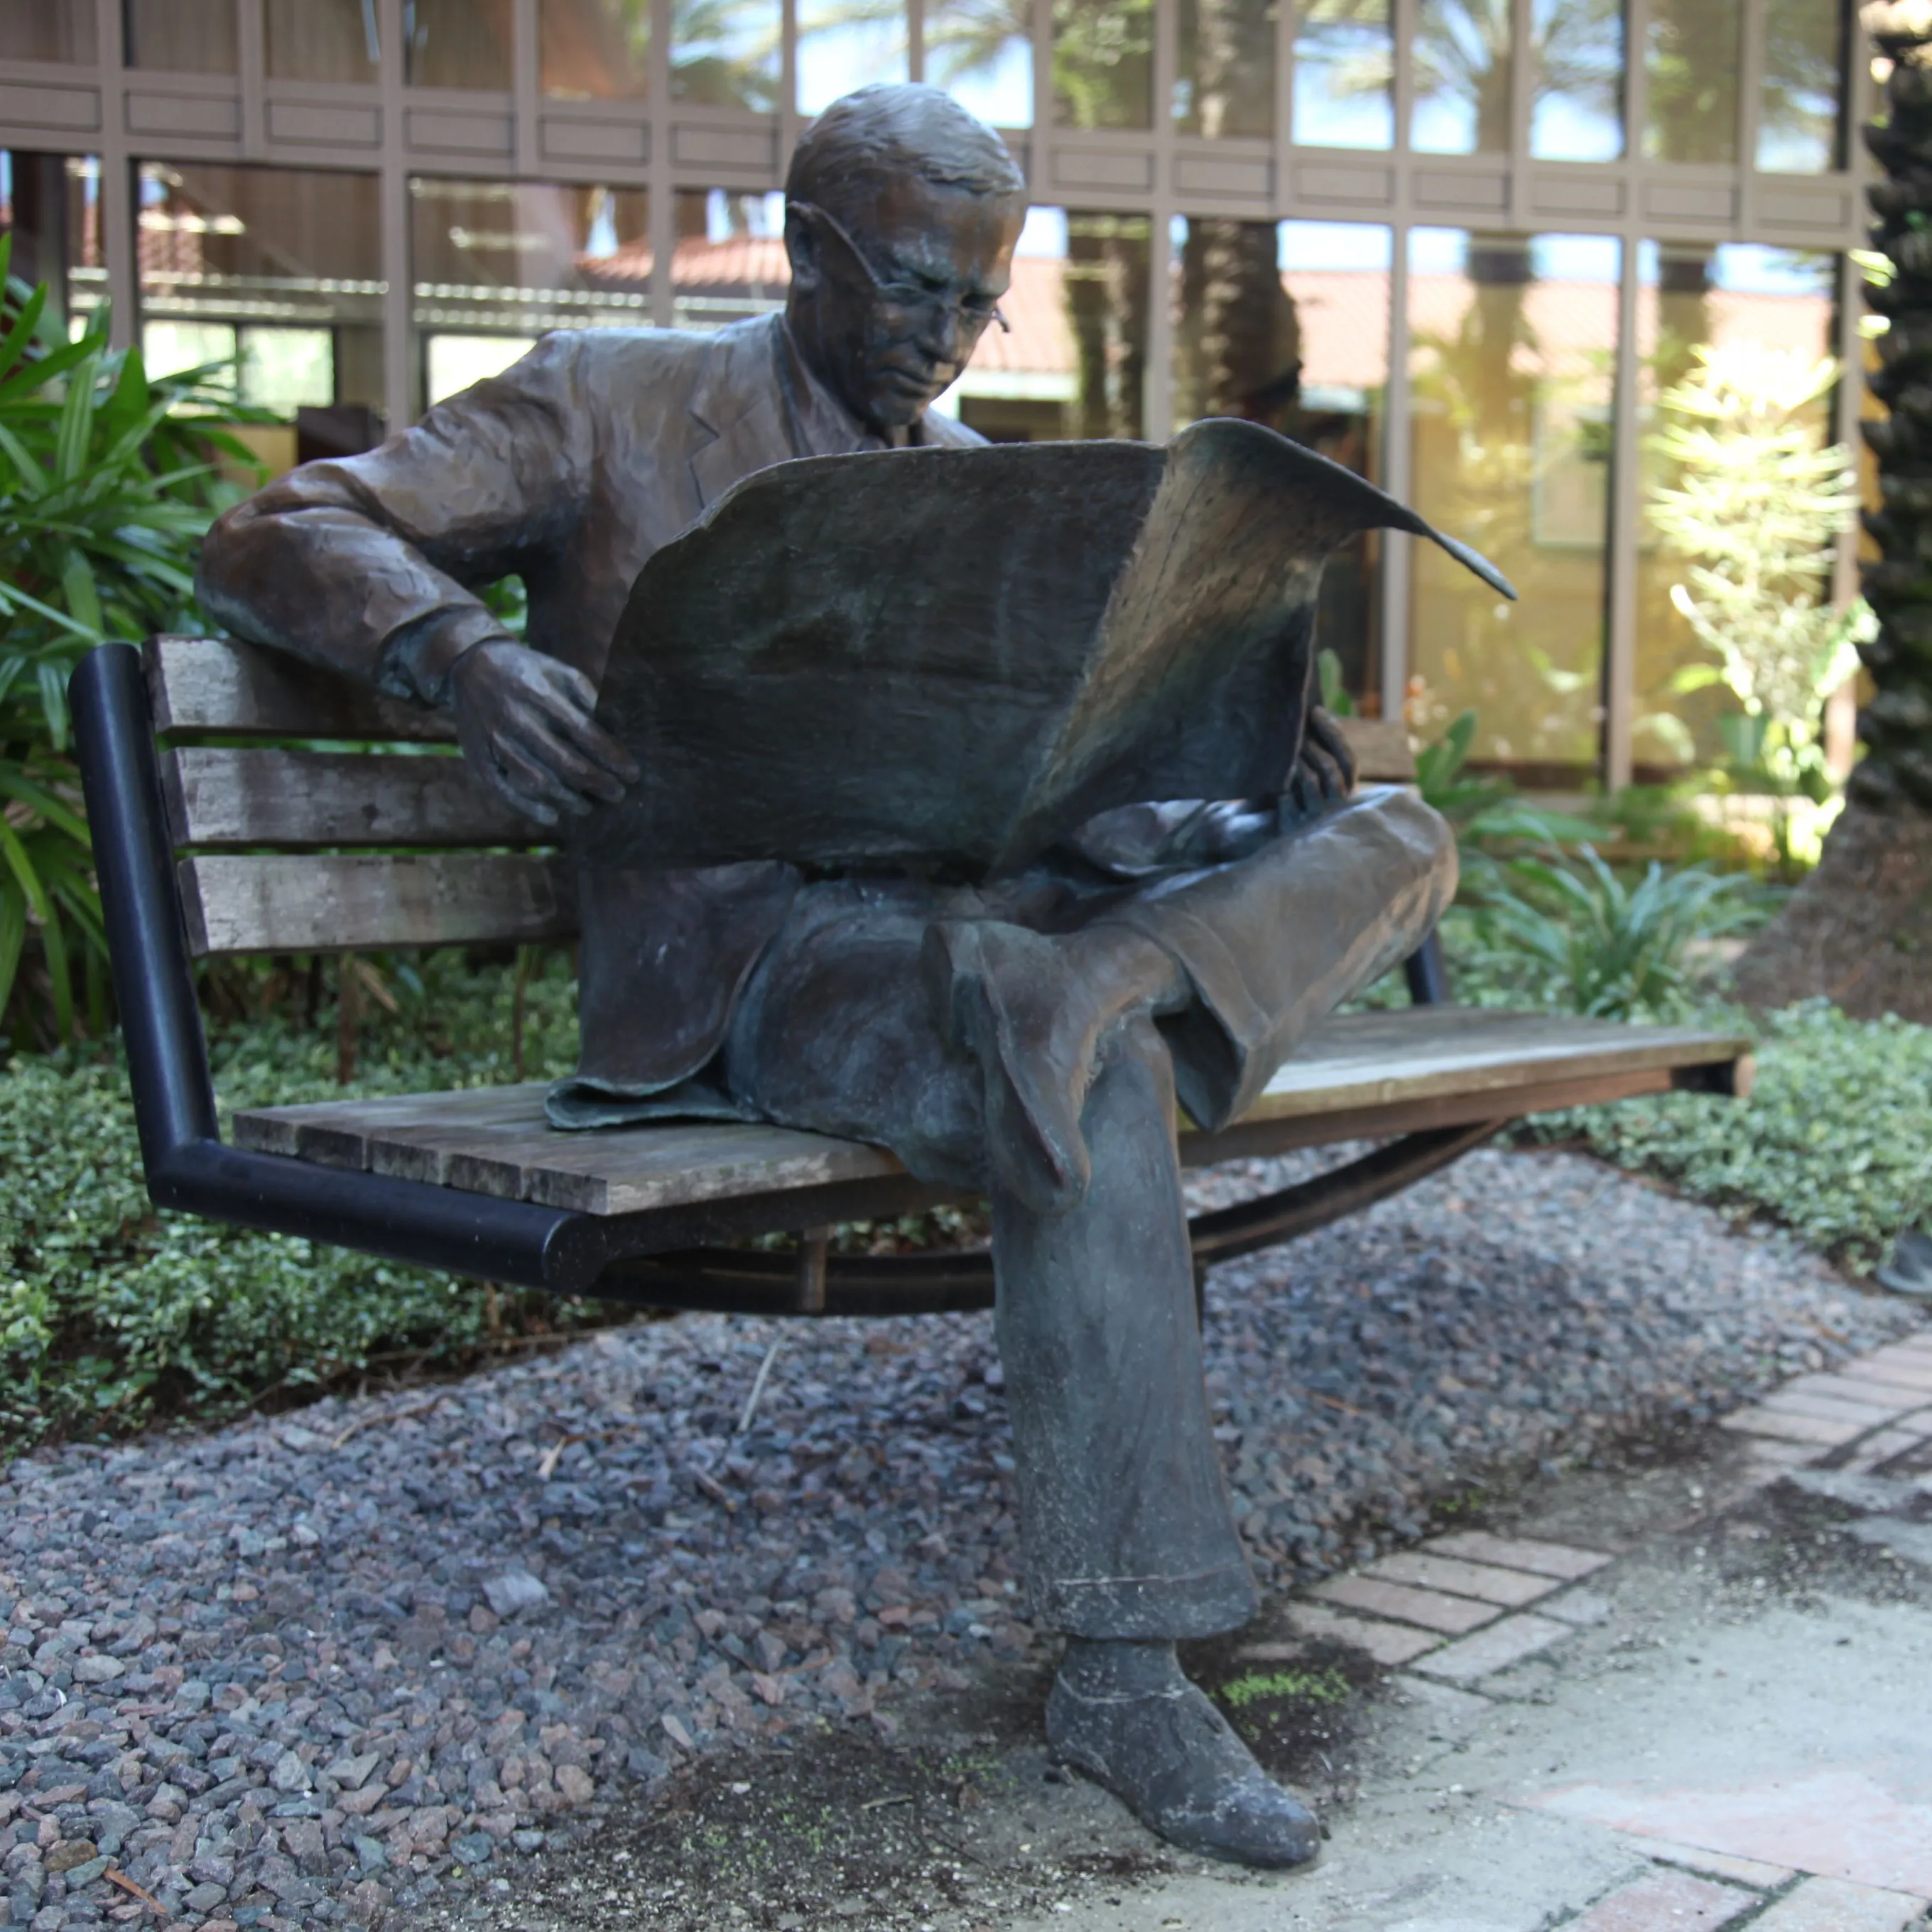 Bronze Artists Statue Bronze Sitting Old Man Garden Sculpture In Chair Bronze Statue